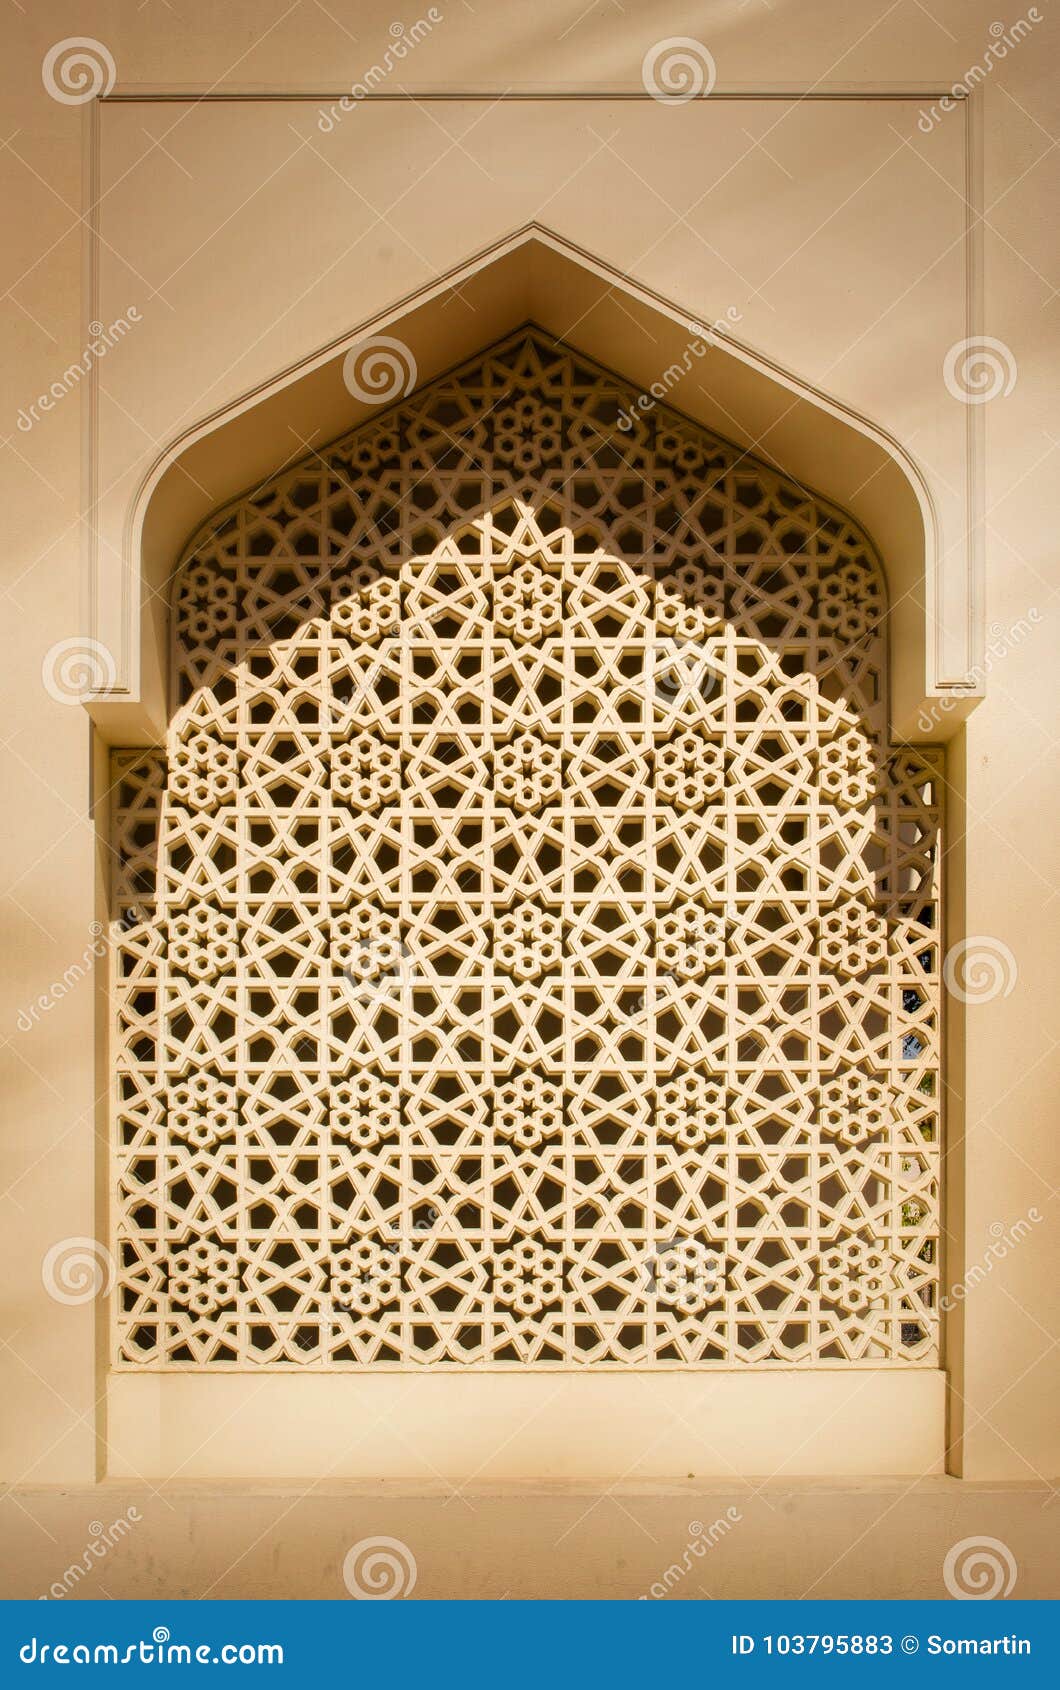 islamic architecture window